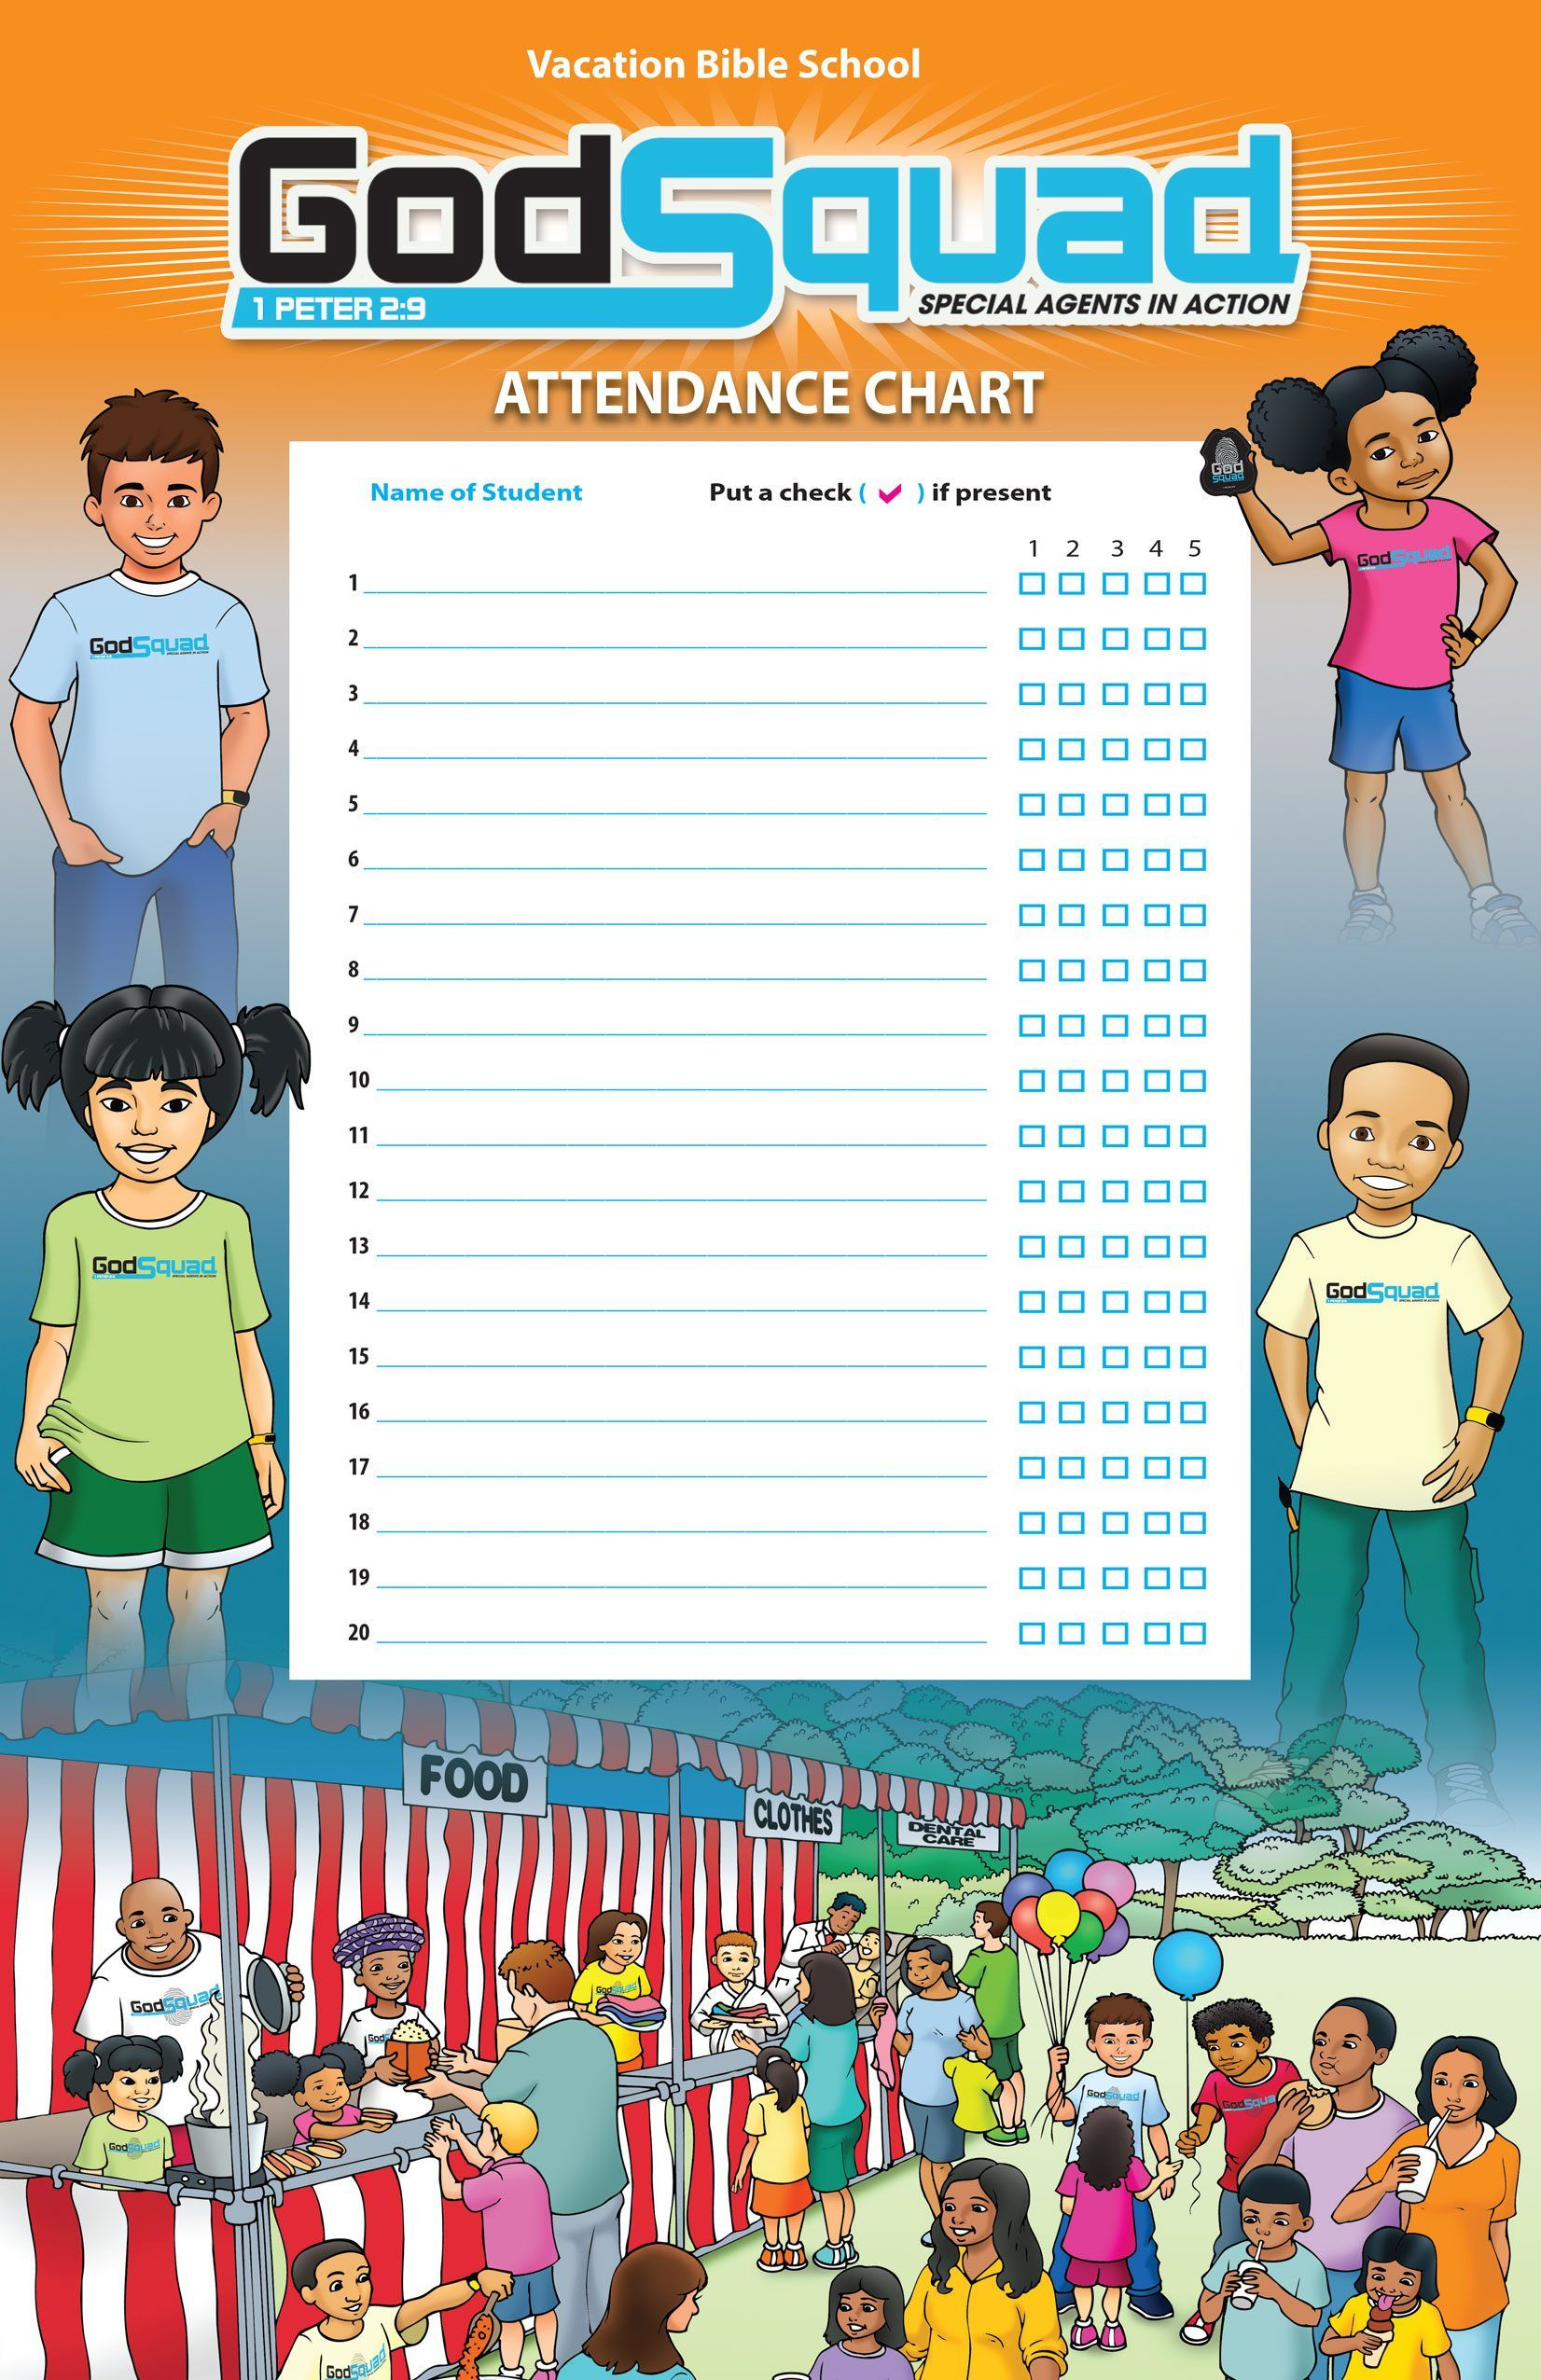 Vbs 2018 | Vacation Bible School | Pinterest | Vacation Bible School - Free Printable Vacation Bible School Materials